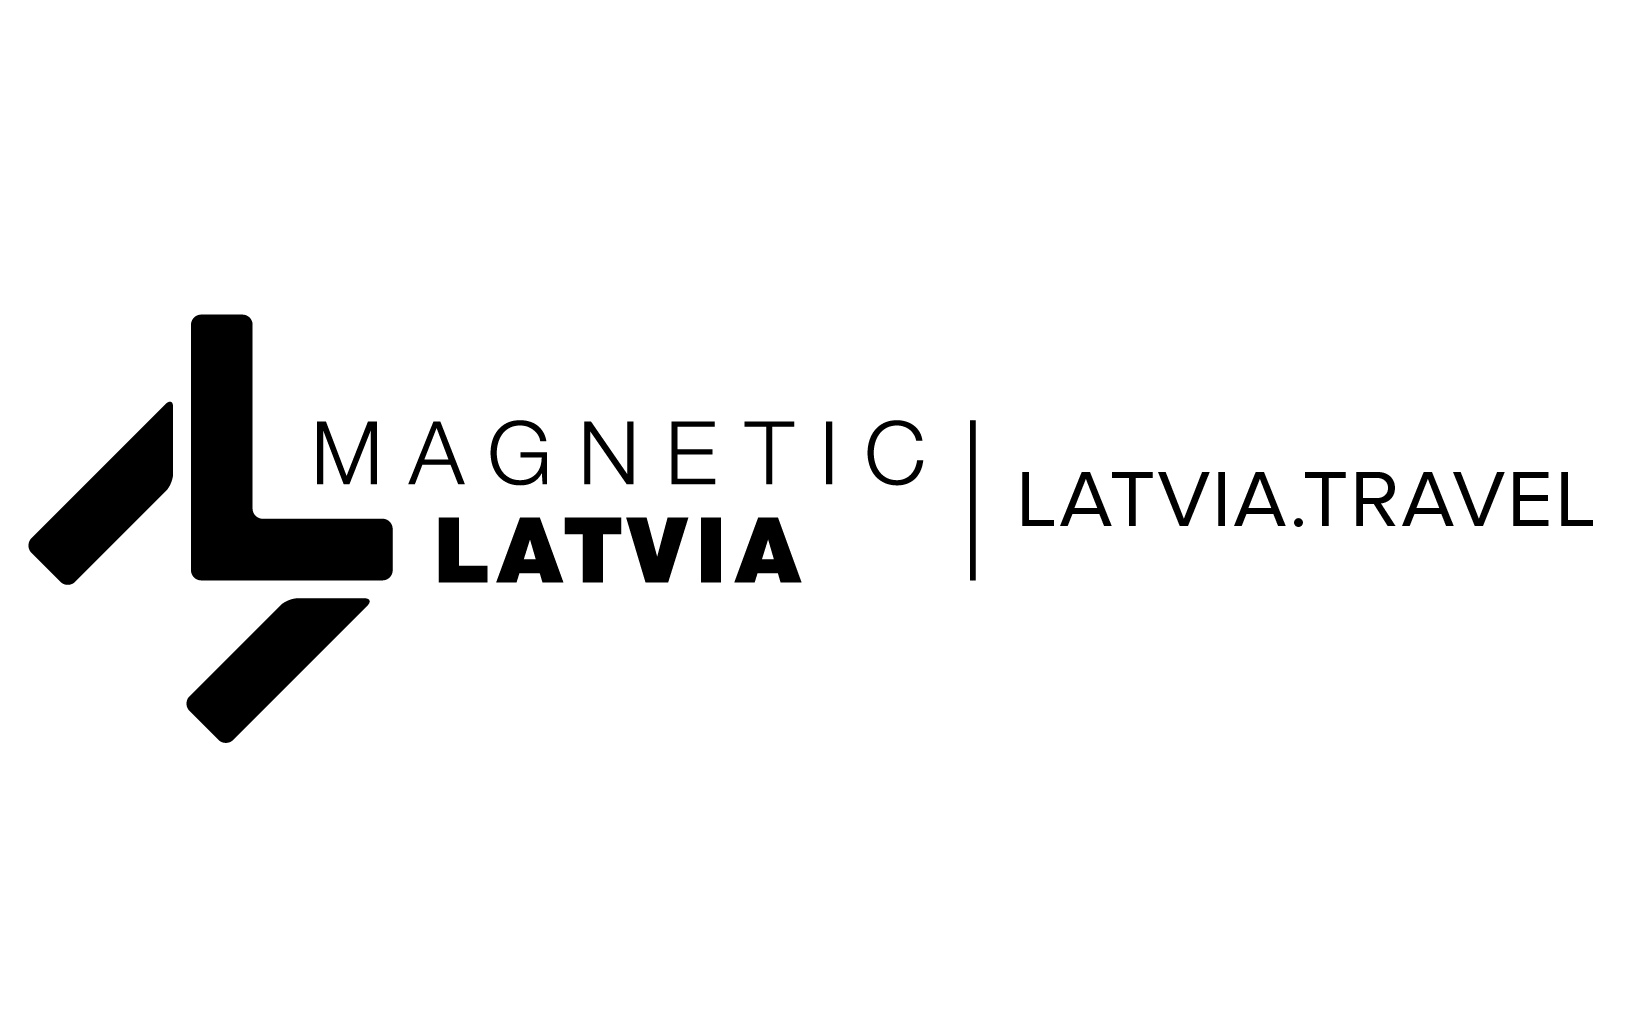 ML_Latvia.Travel.png